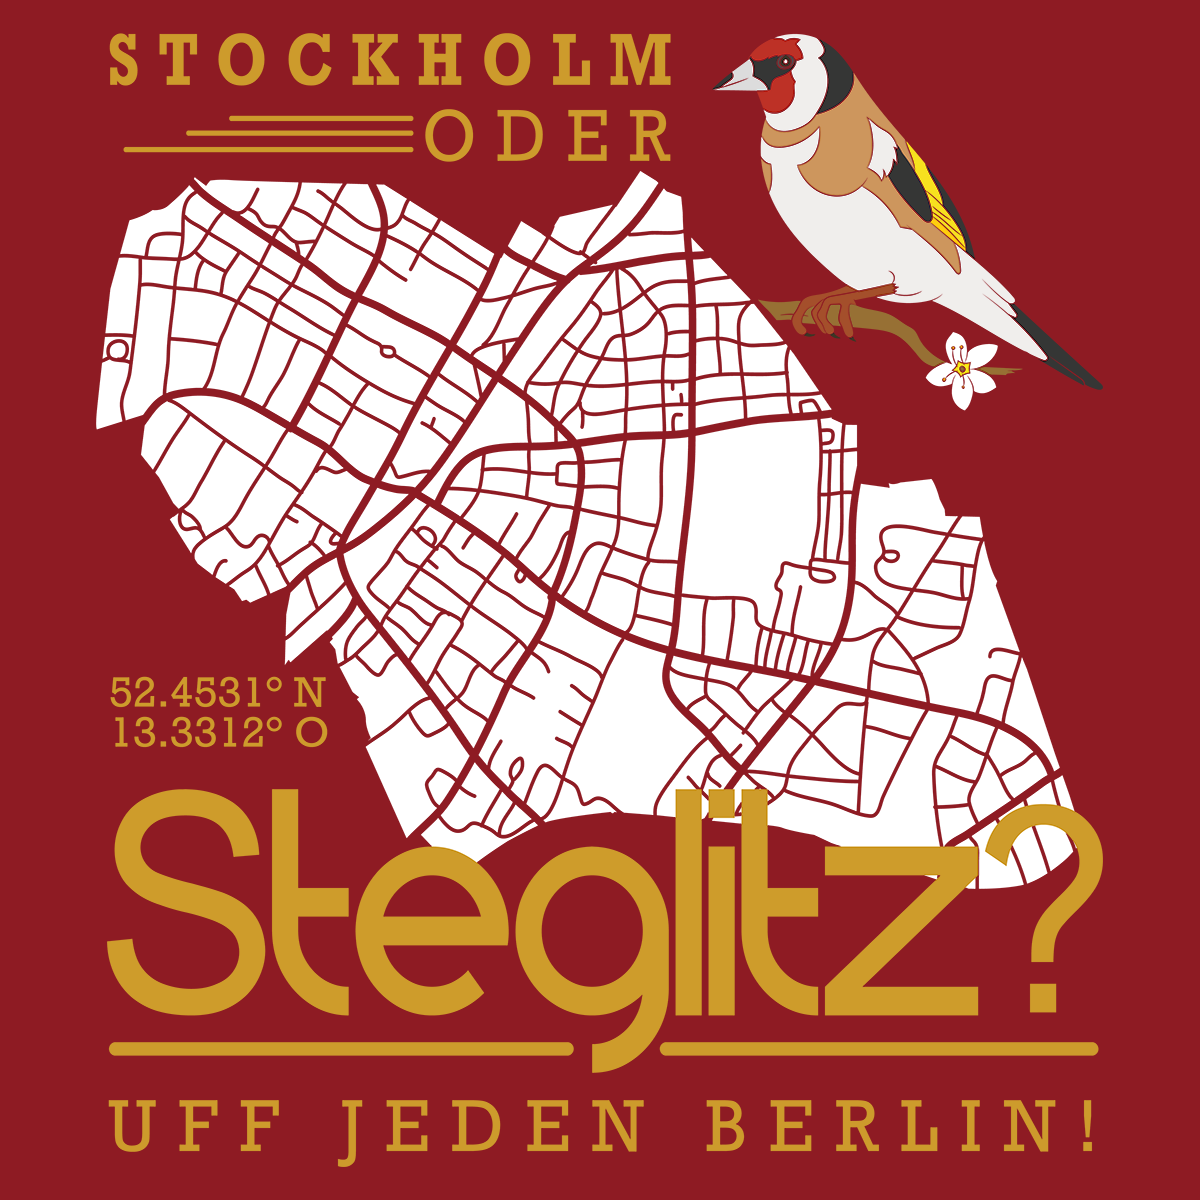 Stockholm oder Steglitz